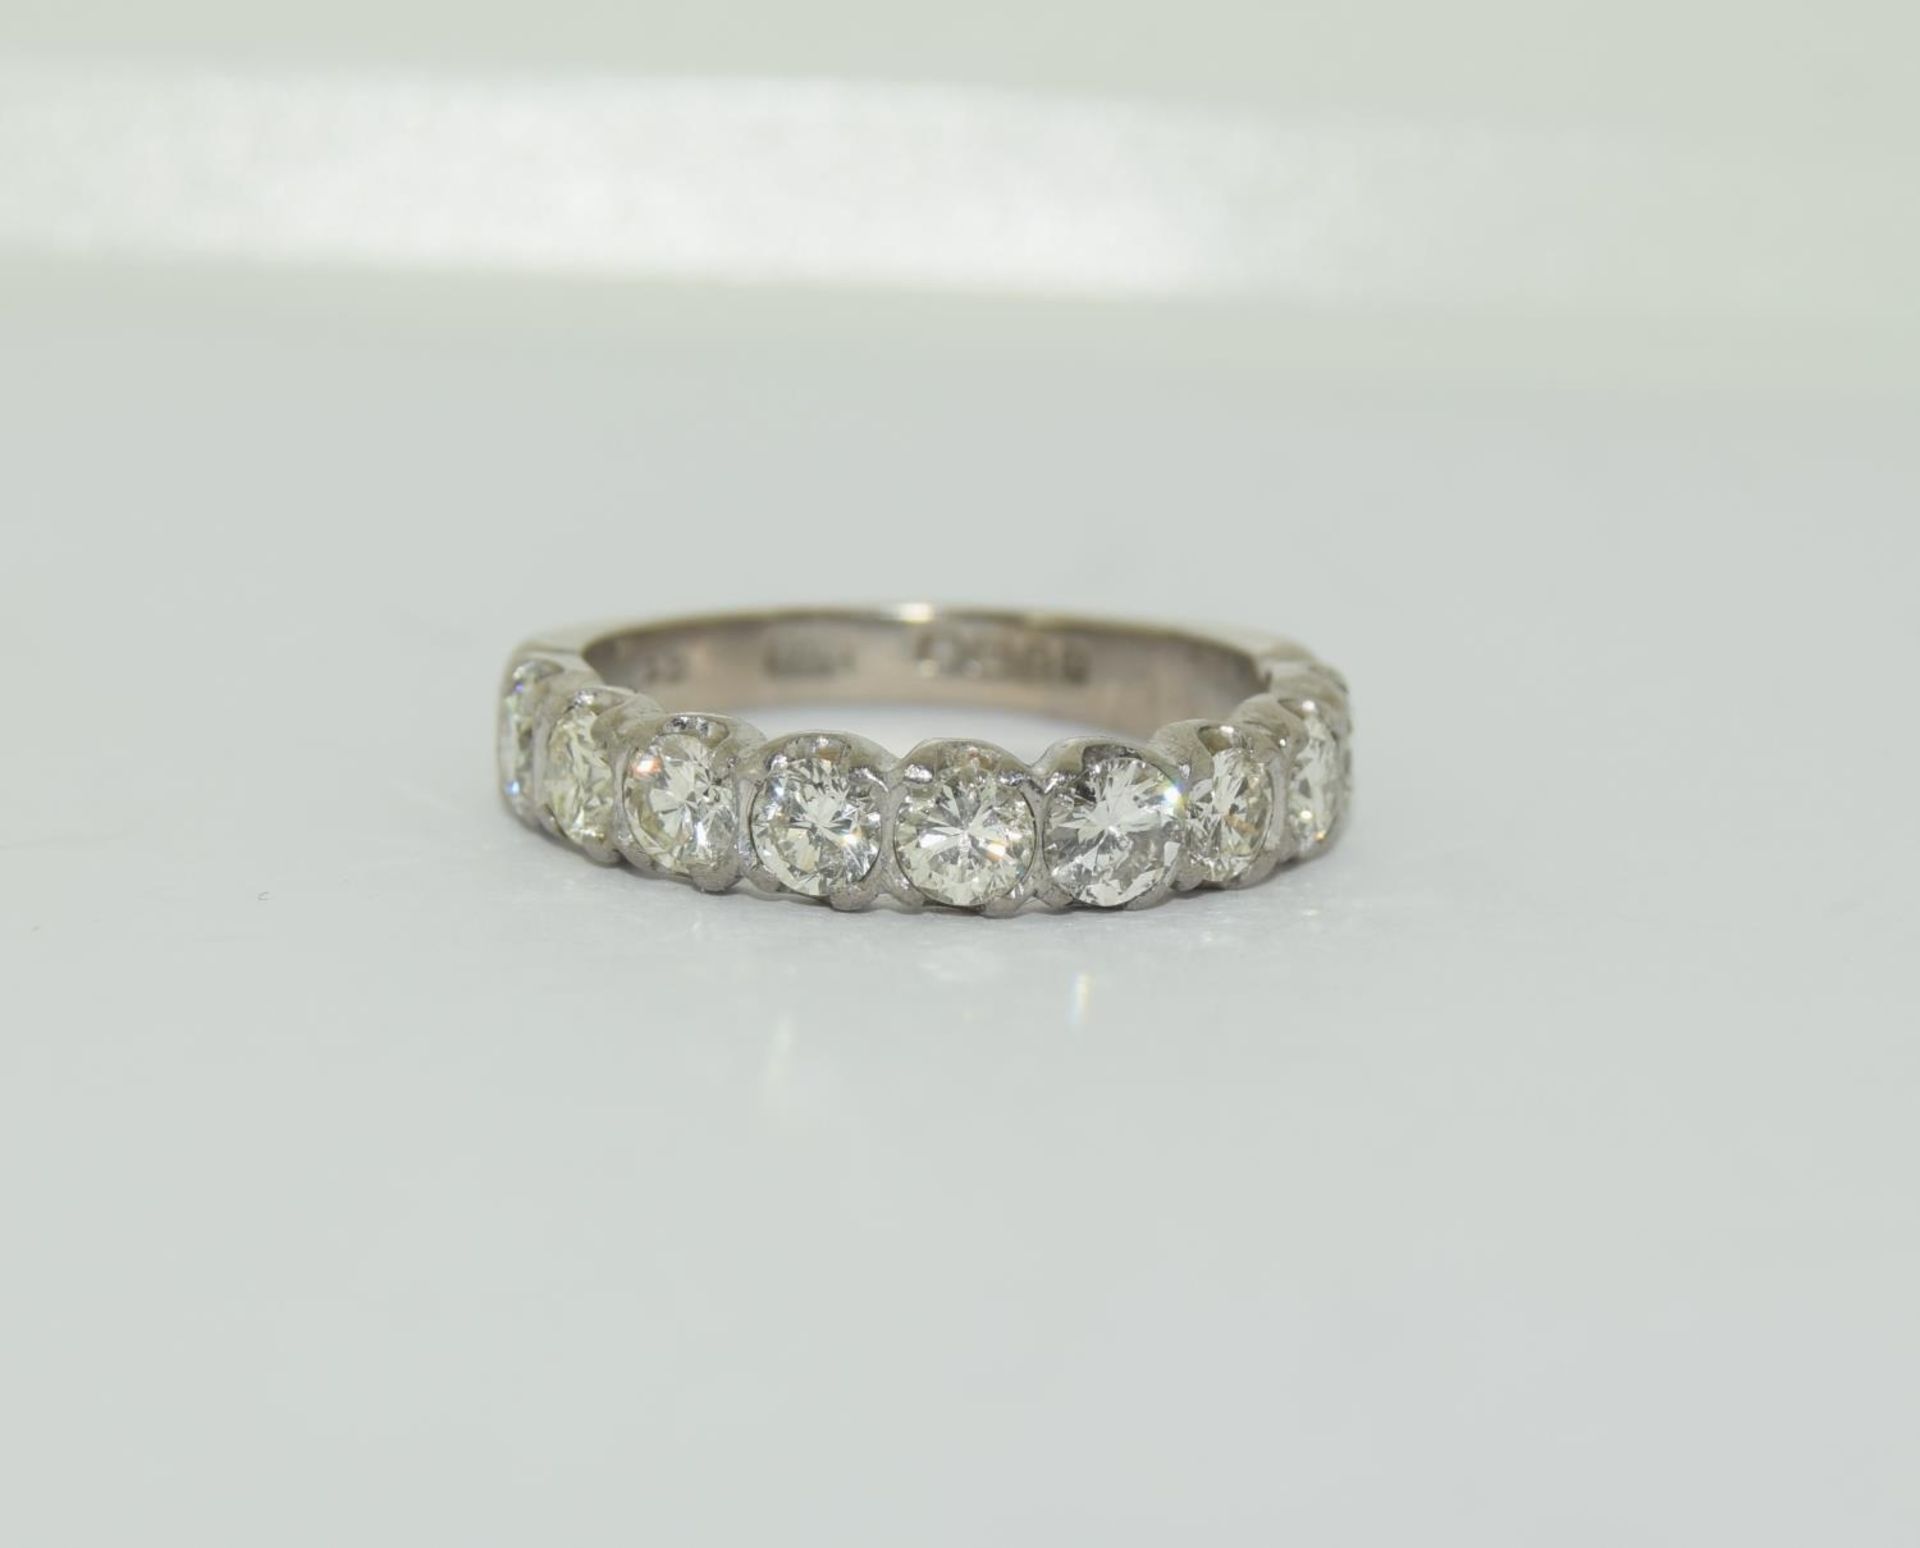 18ct white gold diamond half eternity ring - 1.00ct. Size K+.